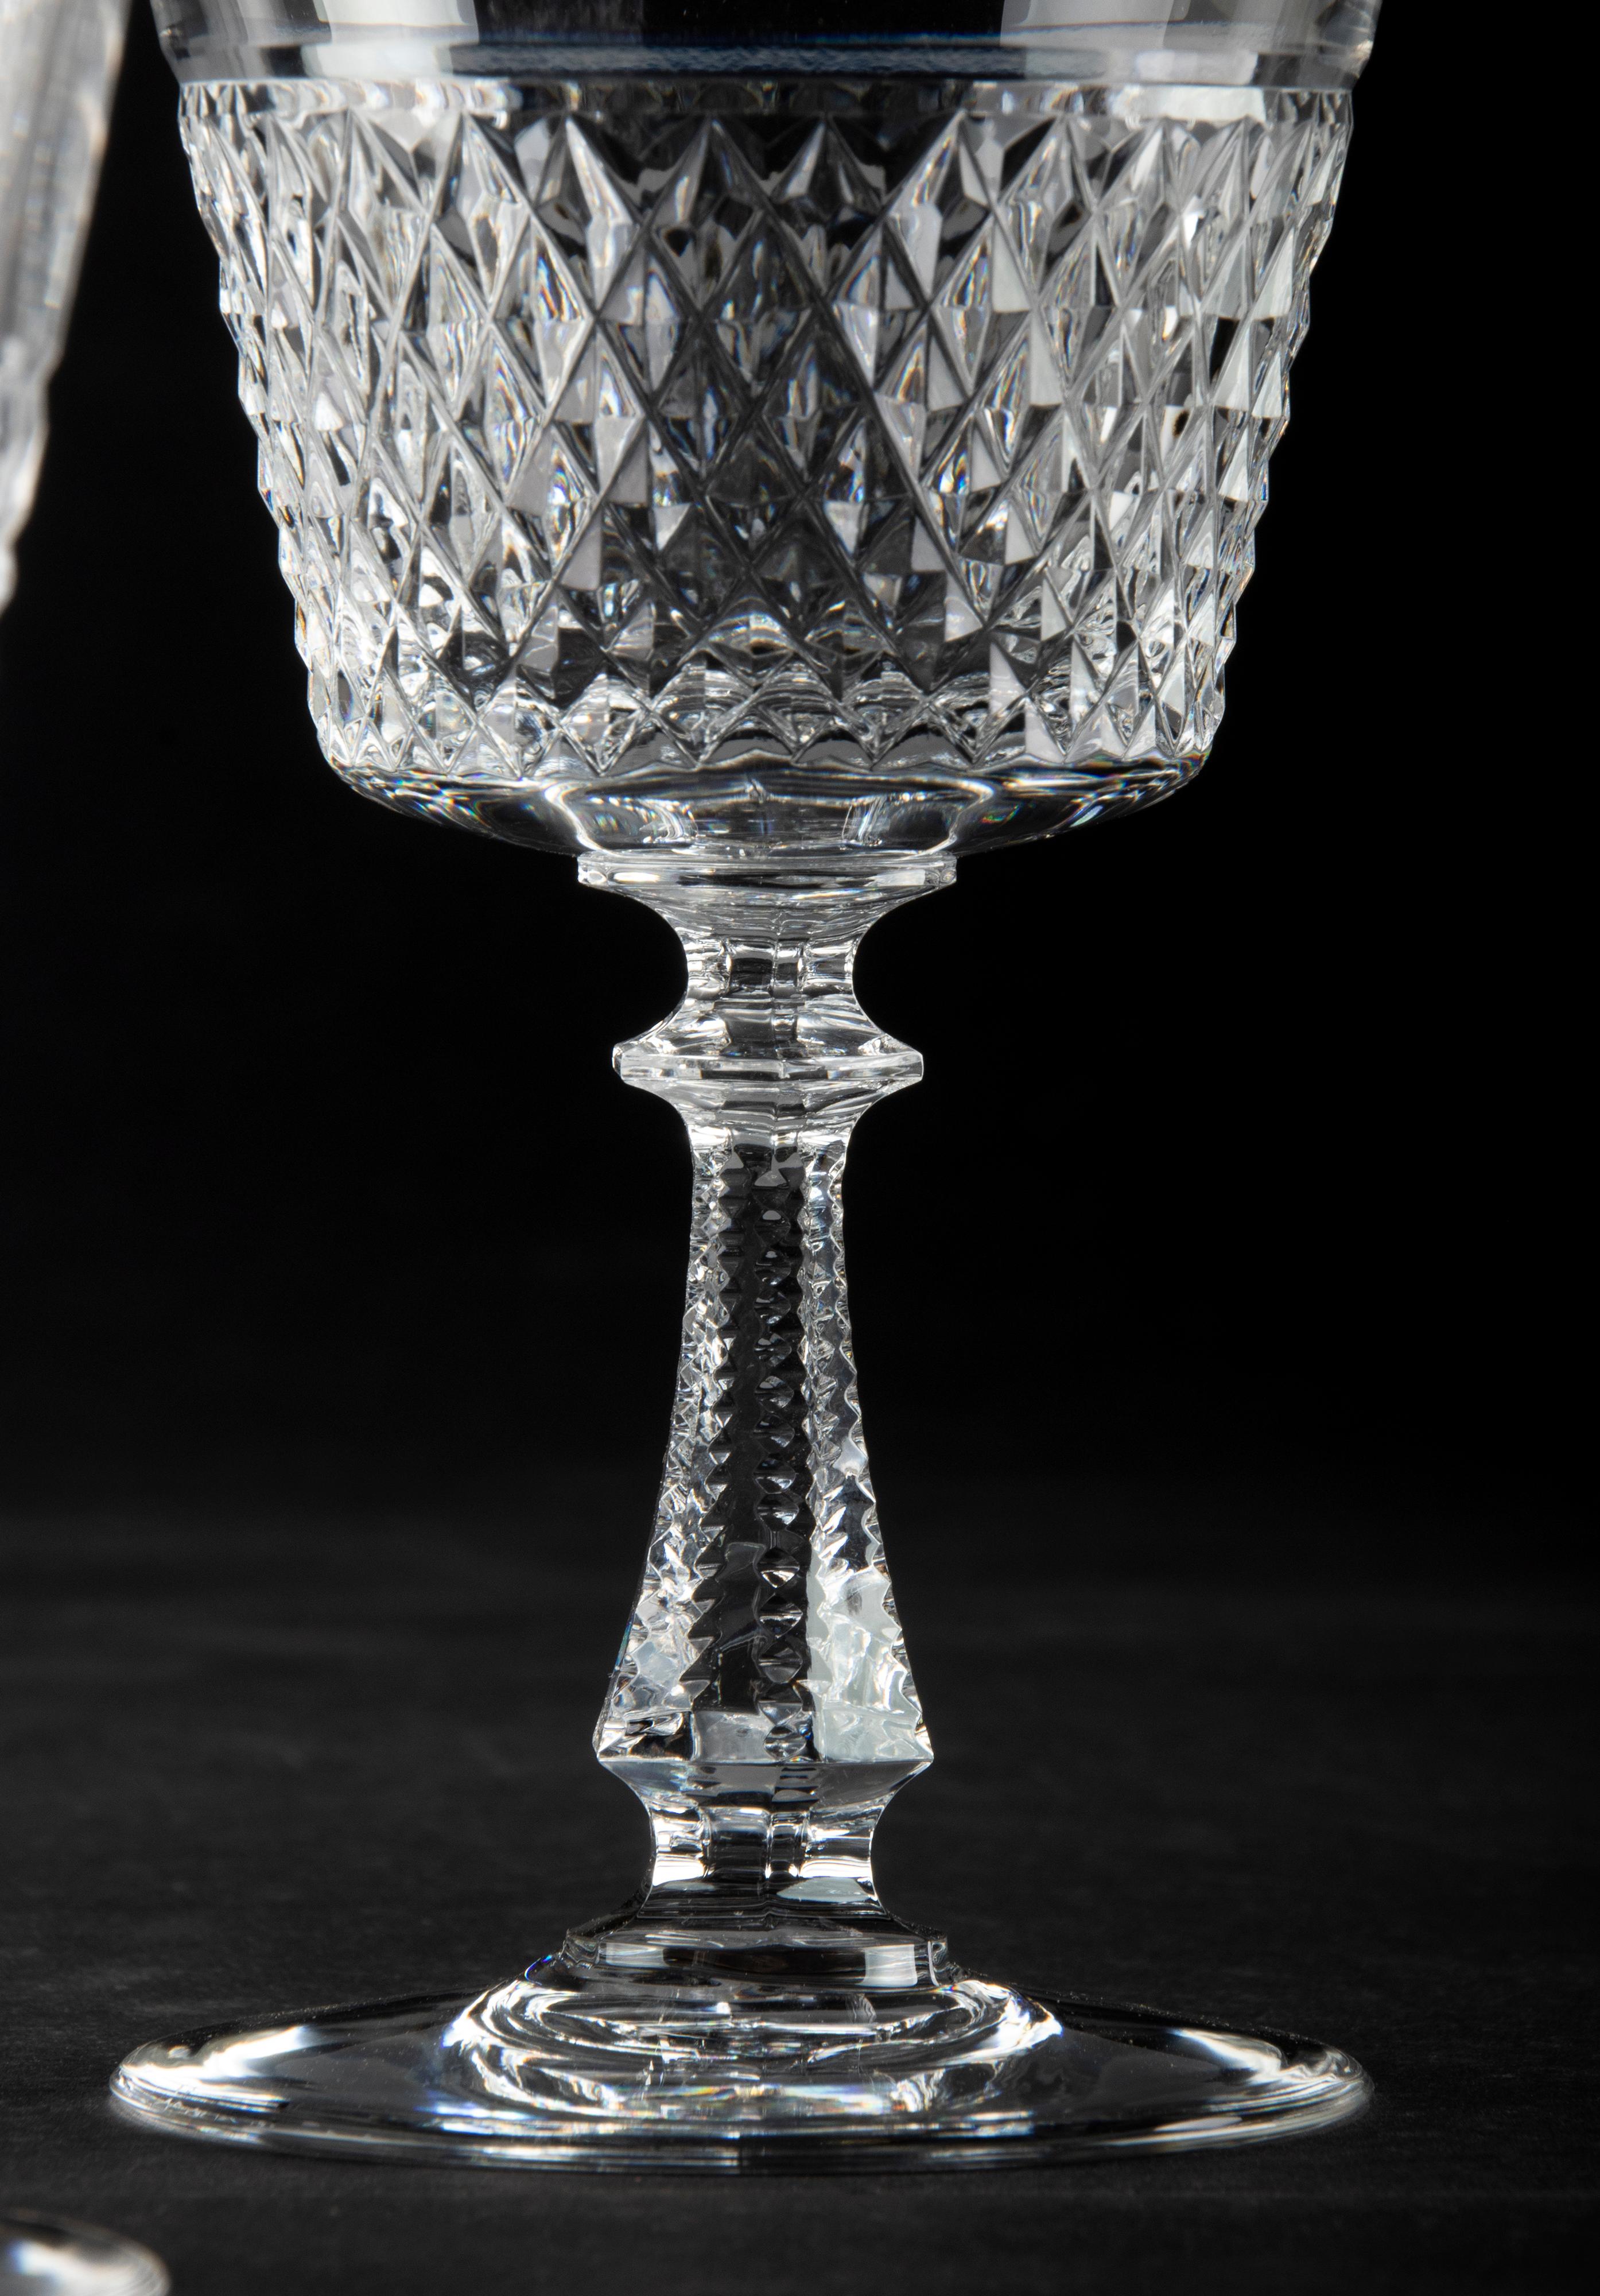 24-Piece Crystal Set of Glasses by Val Saint Lambert model Heidelberg 7